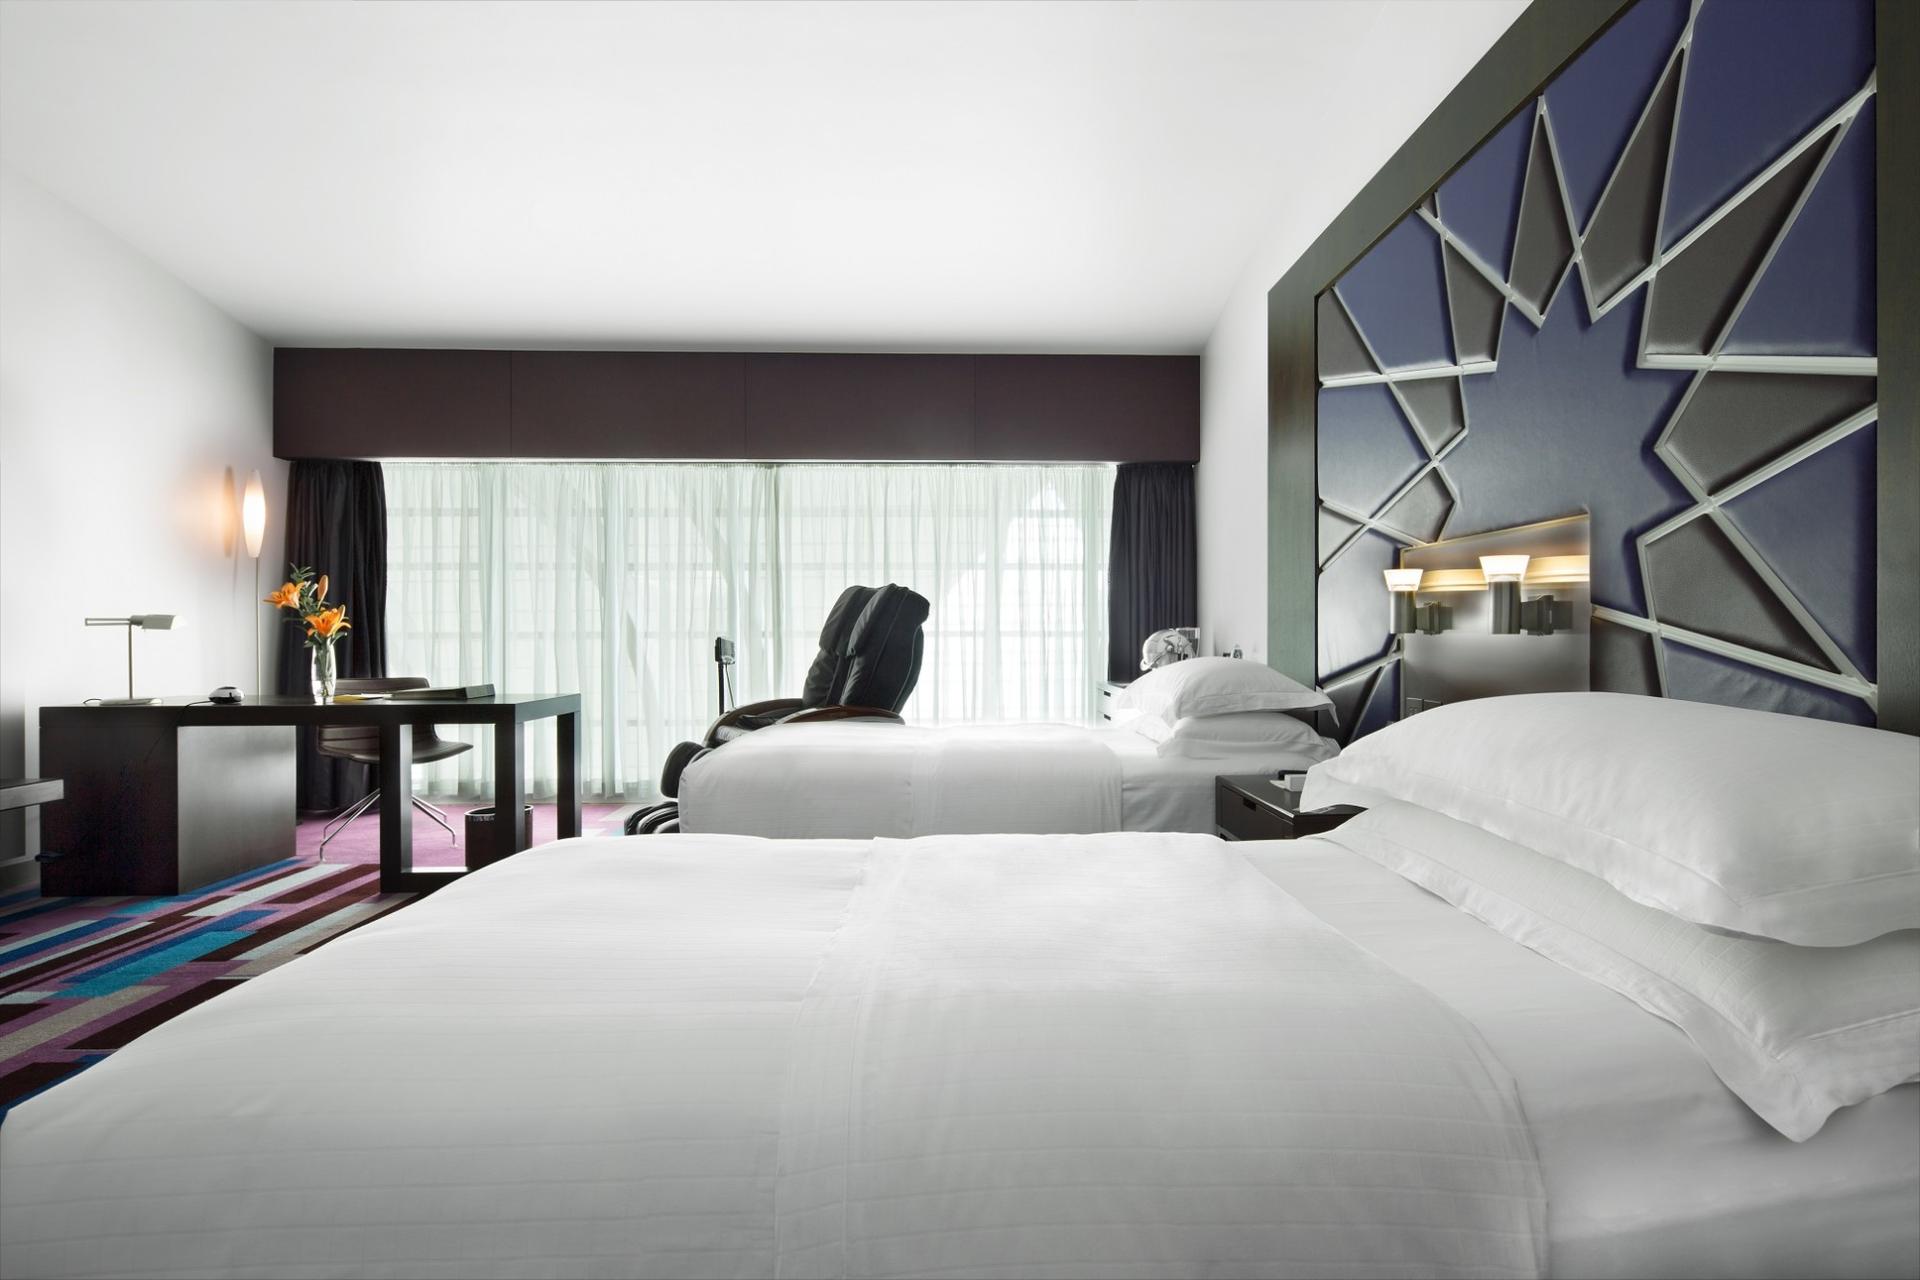 Dubai International Hotel (Concourse B) image 9 of 25